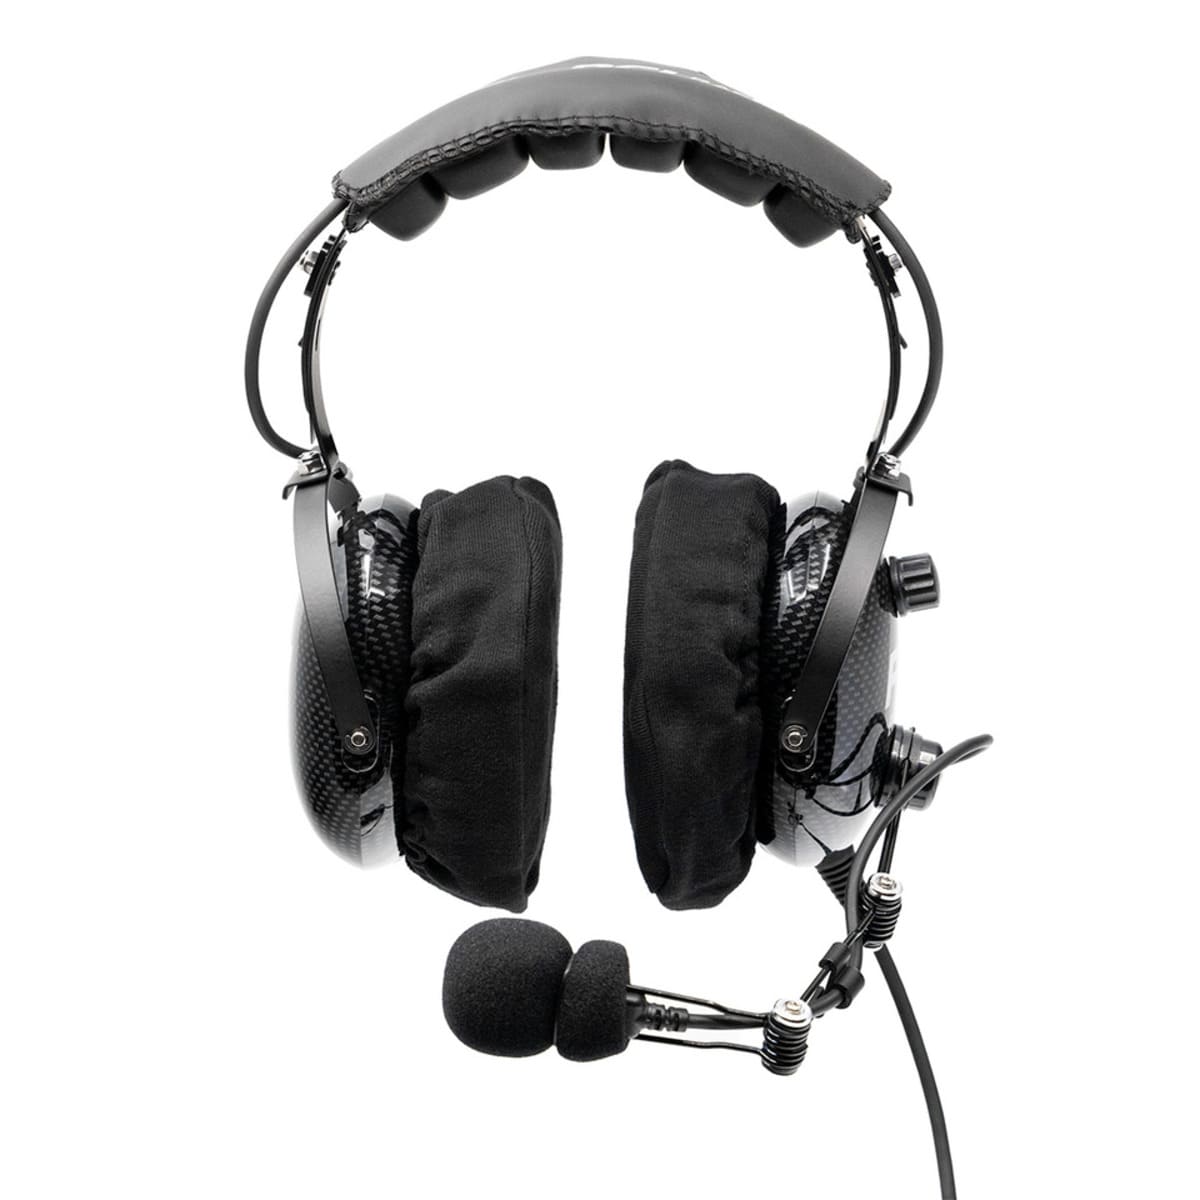 PCI Race Radios Elite G2 Headset With Volume Control